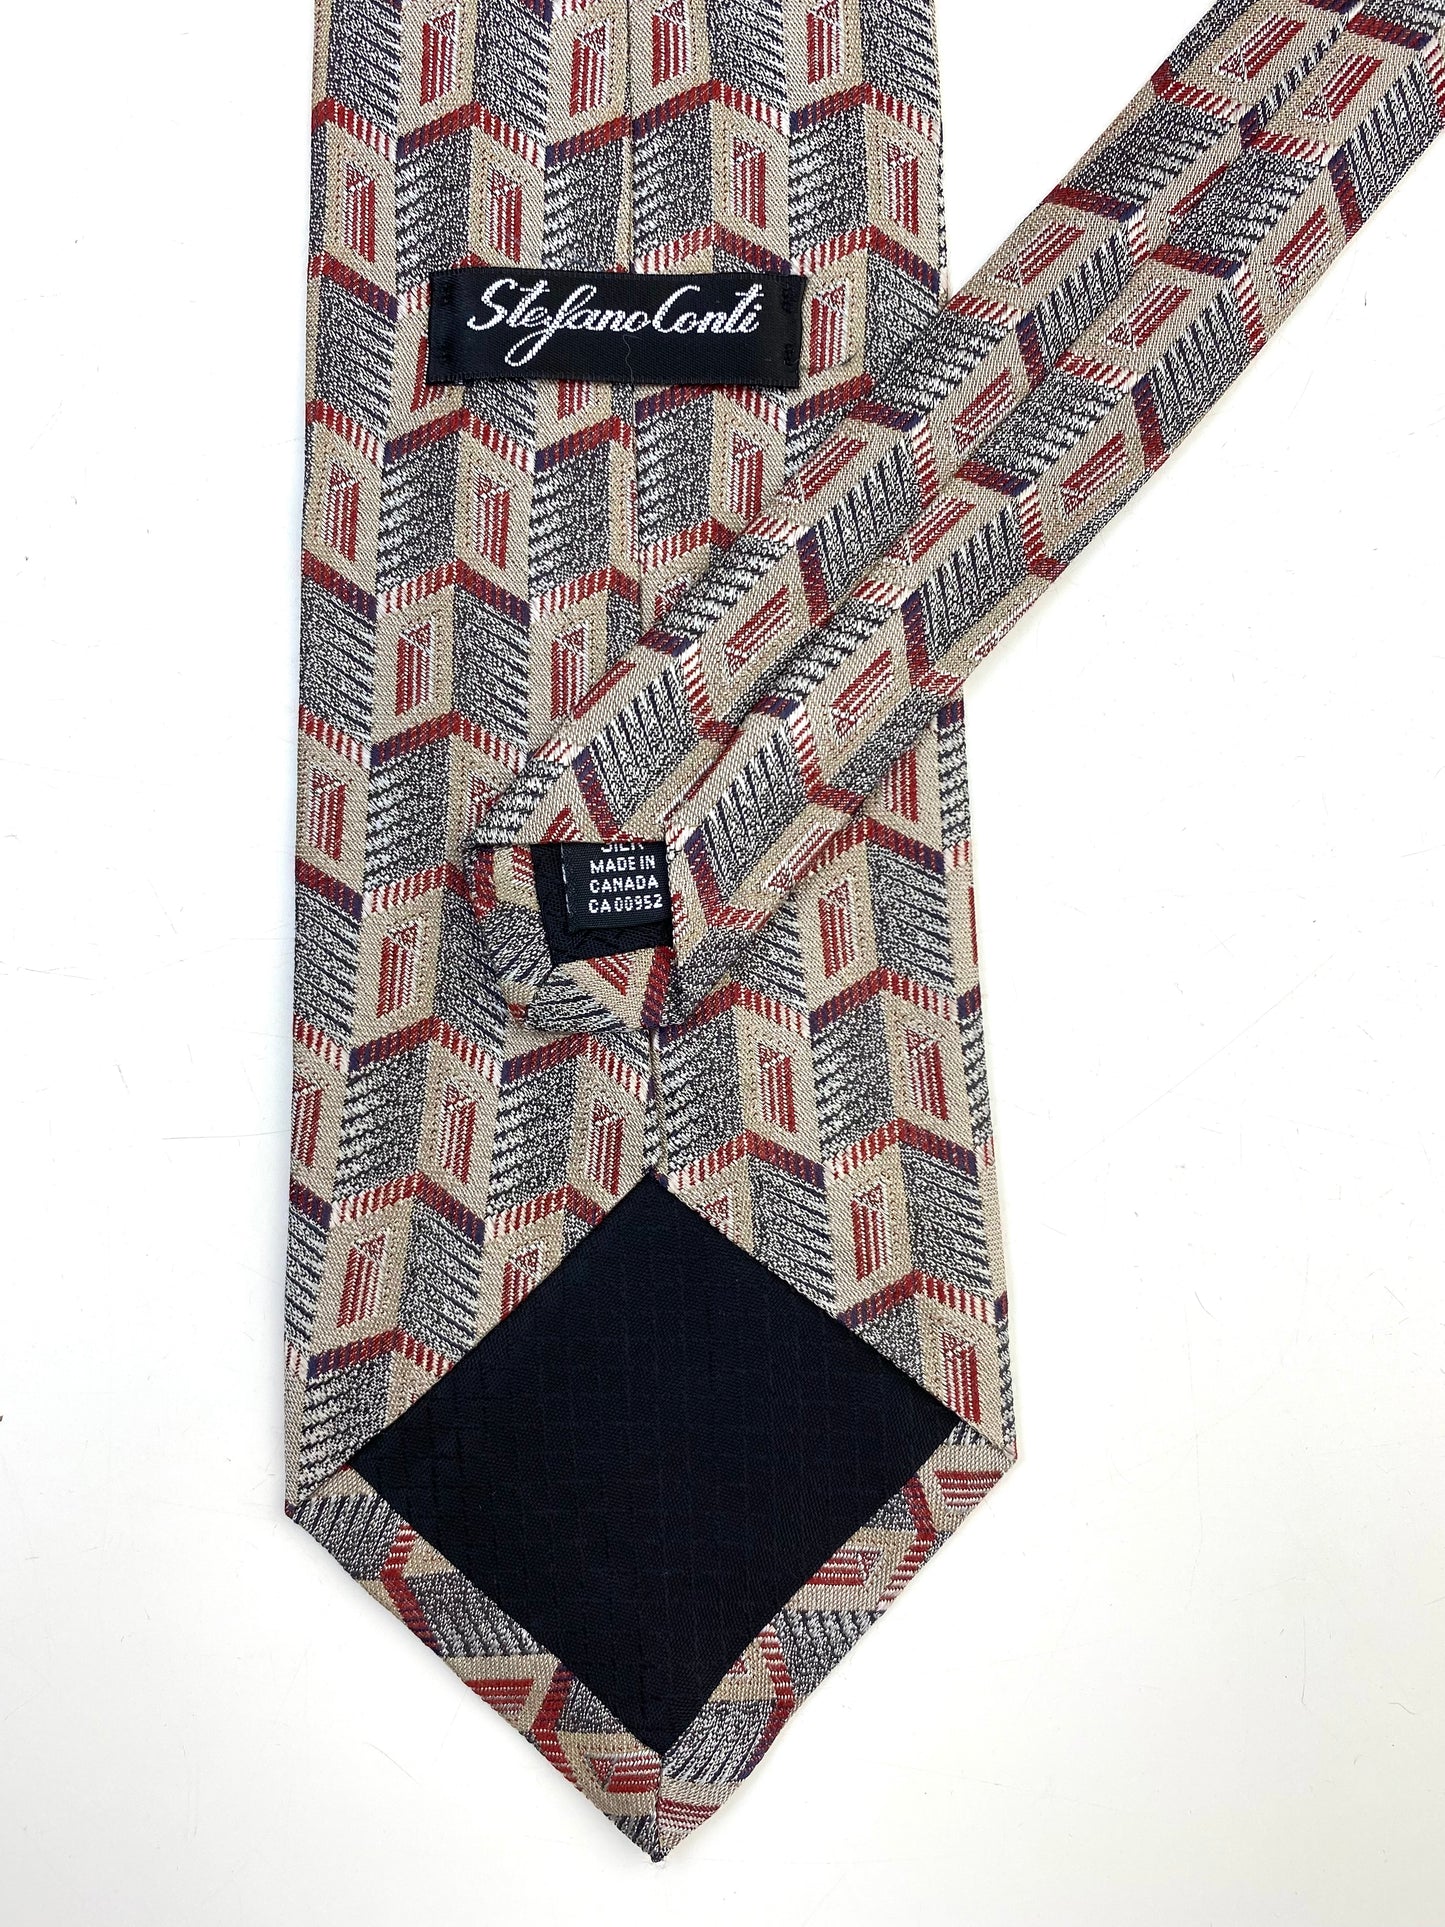 90s Deadstock Silk Necktie, Men's Vintage Wine Grey Geometric Pattern Tie, NOS